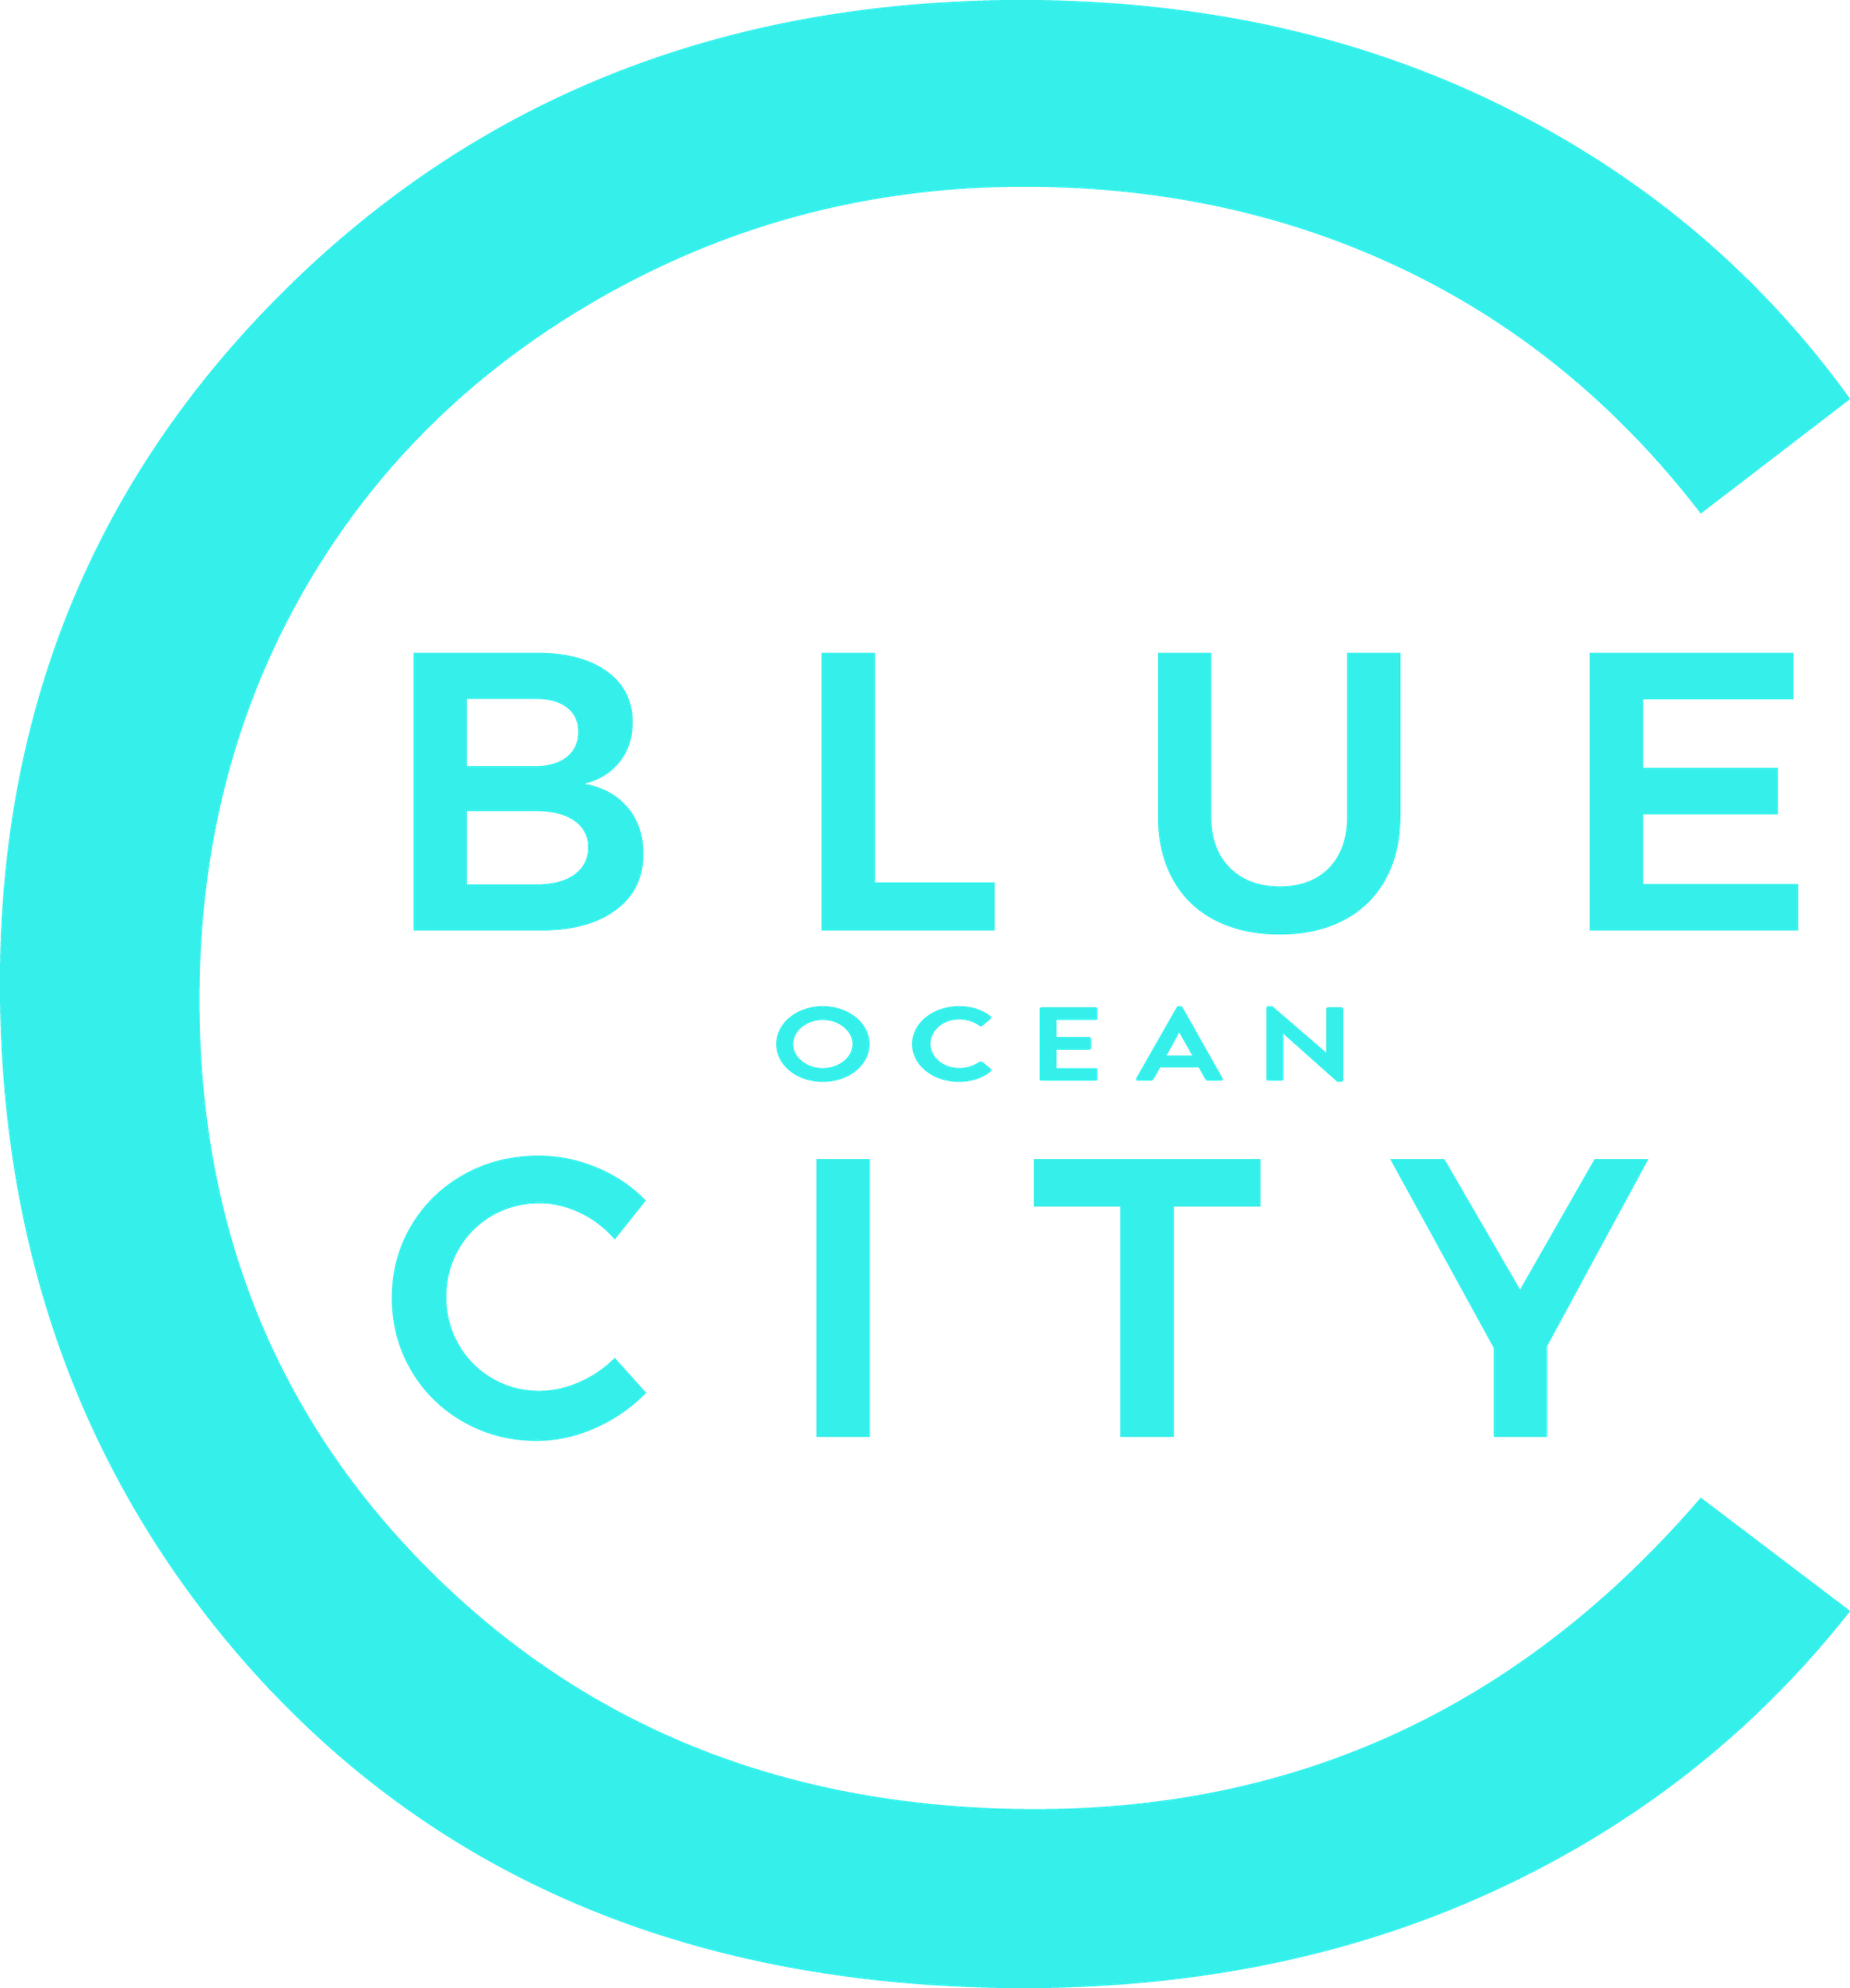 Blue Ocean Advisory Board: